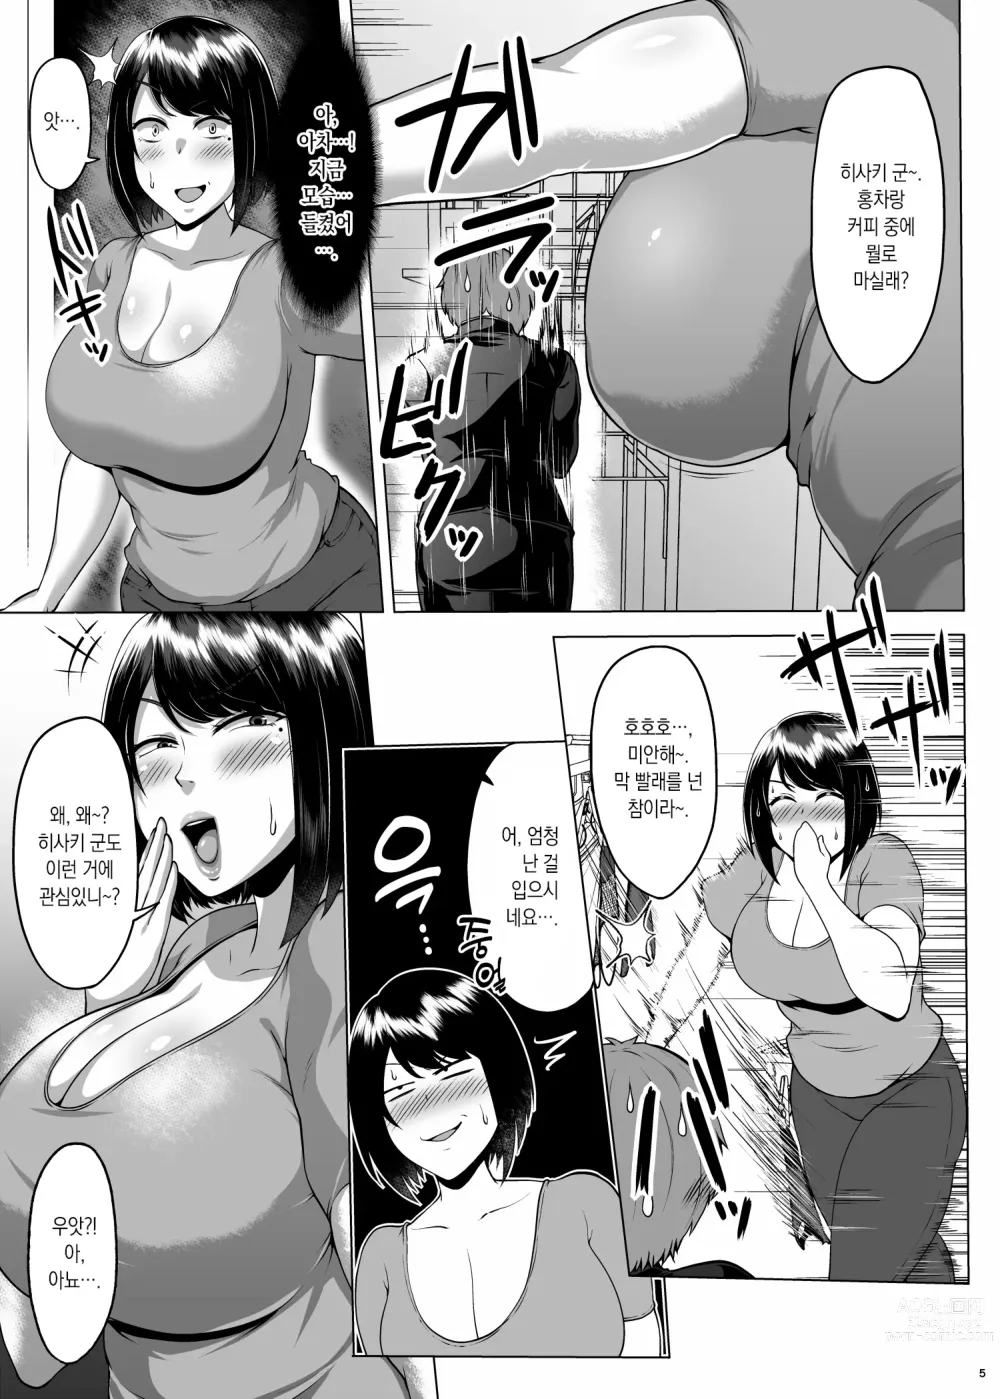 Page 6 of doujinshi 친구의 육덕육덕한 엄마와 질펀하게 땀에 절은 1박 2일 스터디